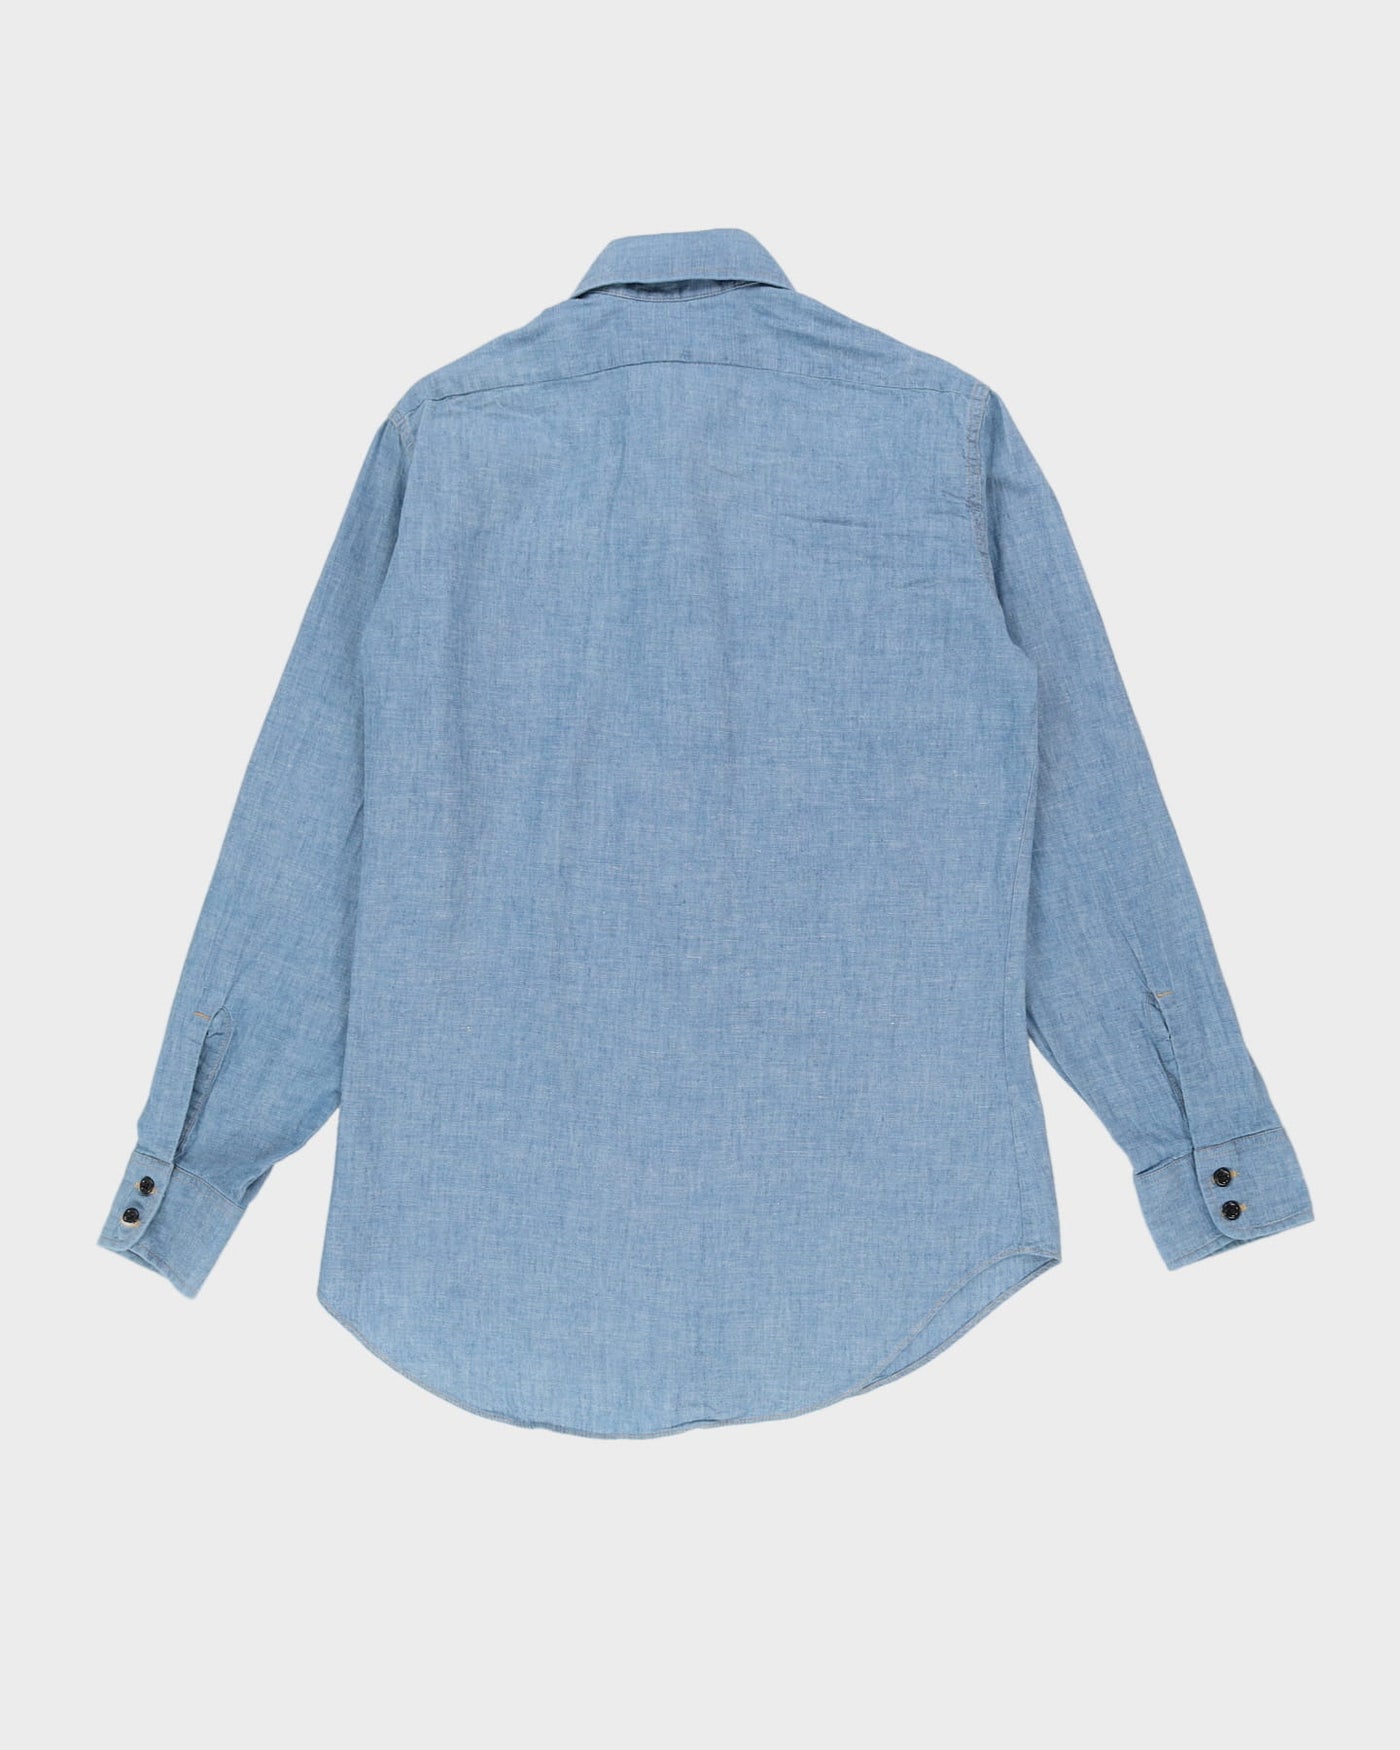 Vintage 80s Levi's Blue Lightweight Denim Shirt - M